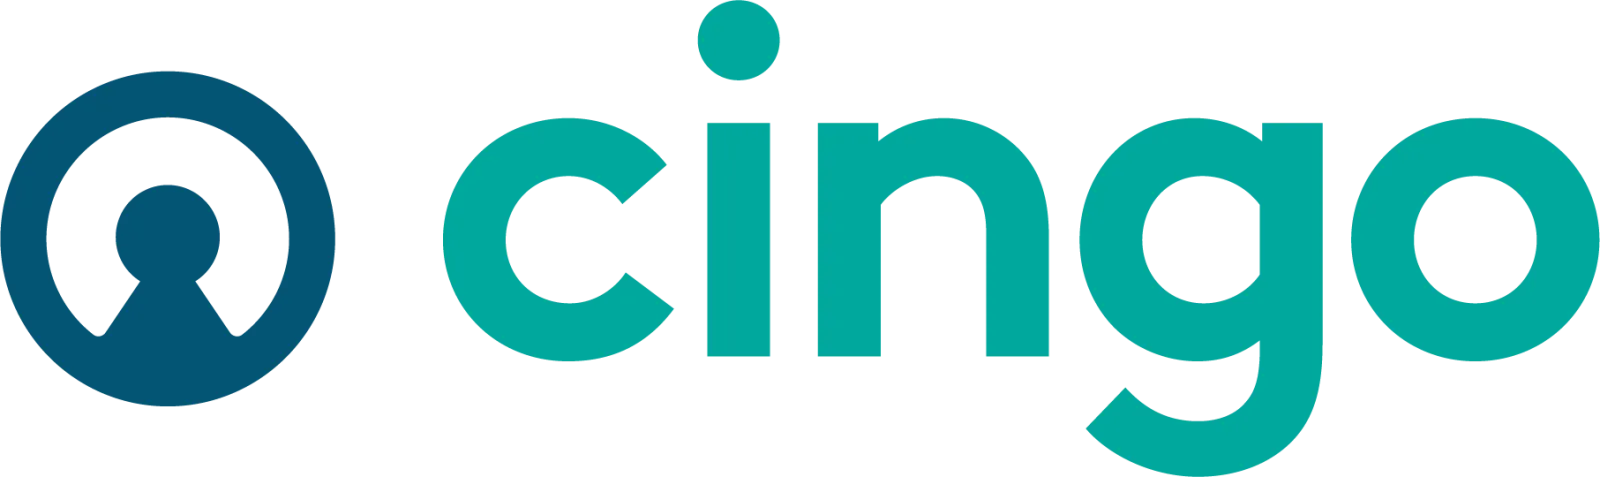 Dublin, GA based Allgood Services, Inc. to change name to Cingo